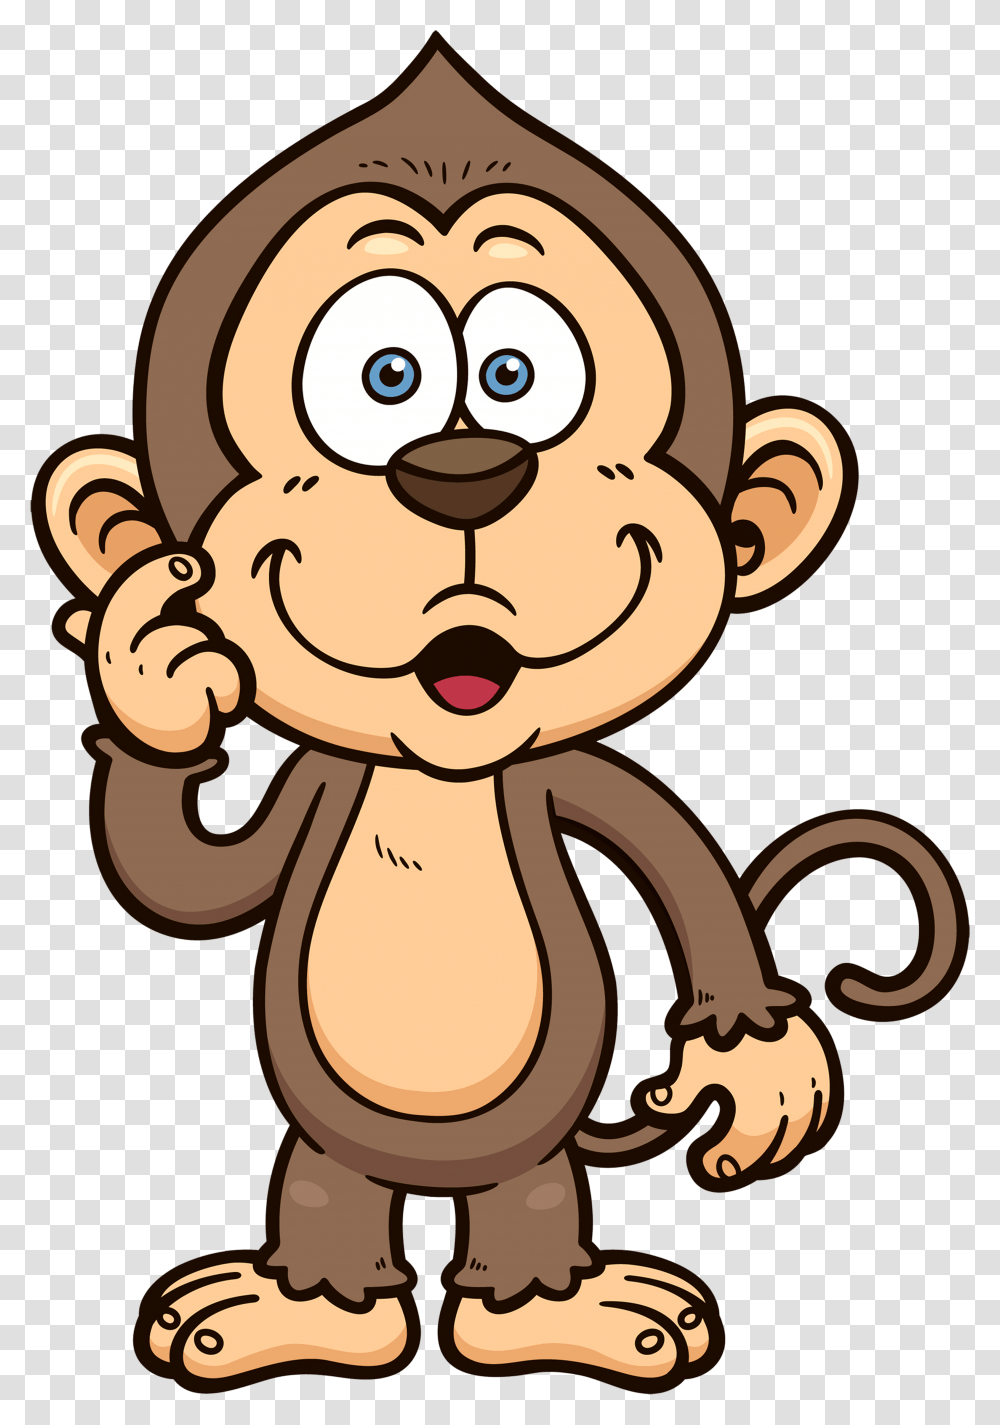 Baby Monkeys Cartoon Clip Art Monkey Cartoon Background, Outdoors, Nature, Cross, Symbol Transparent Png